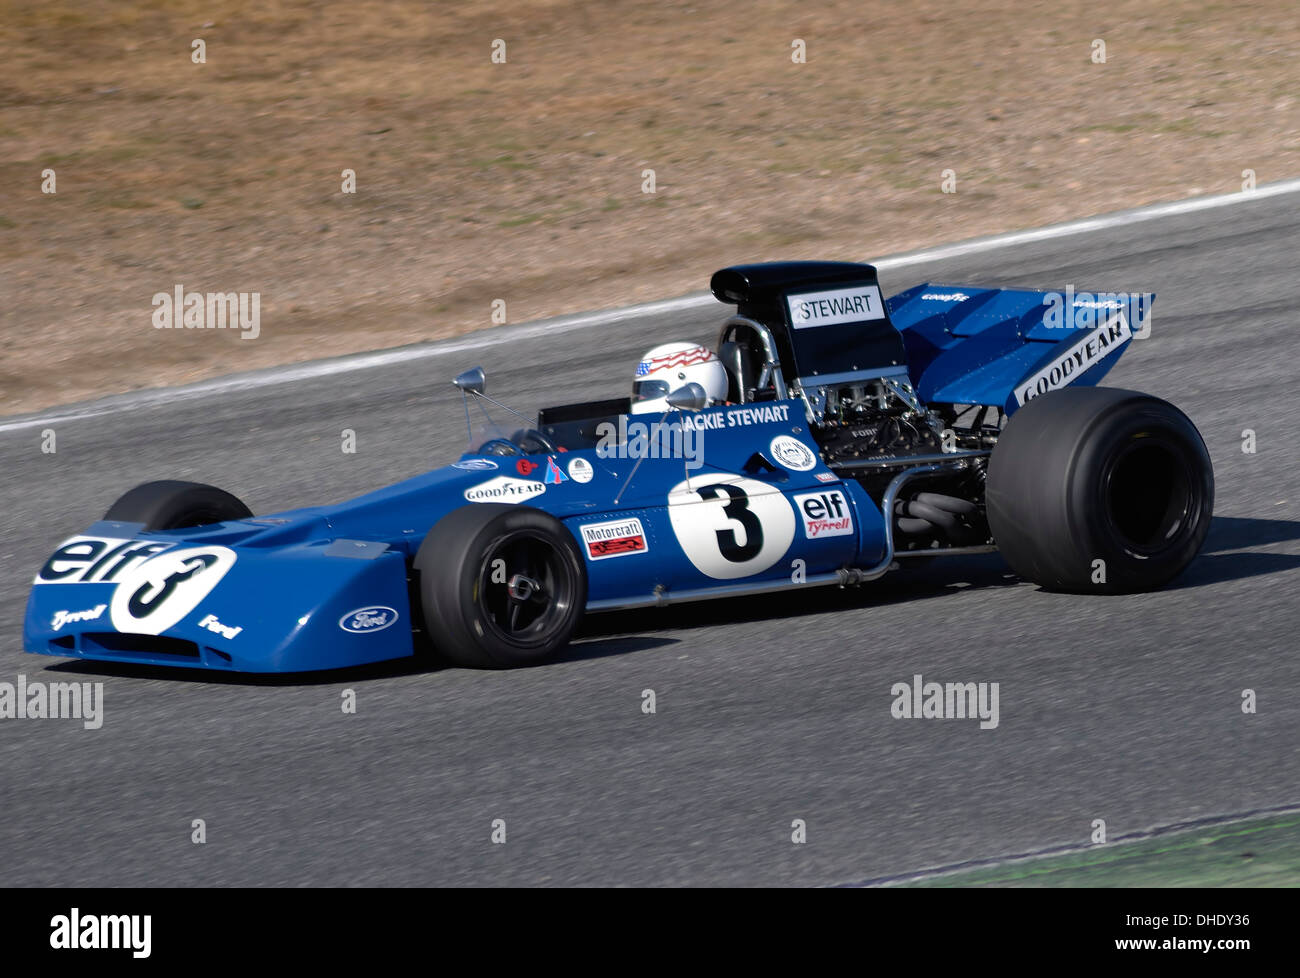 Jarama Vintage Festival Oktober 2011. Sir John Young "Jackie" Stewart Tyrrell F1. Jarama Circuit, Madrid, Spanien. Stockfoto